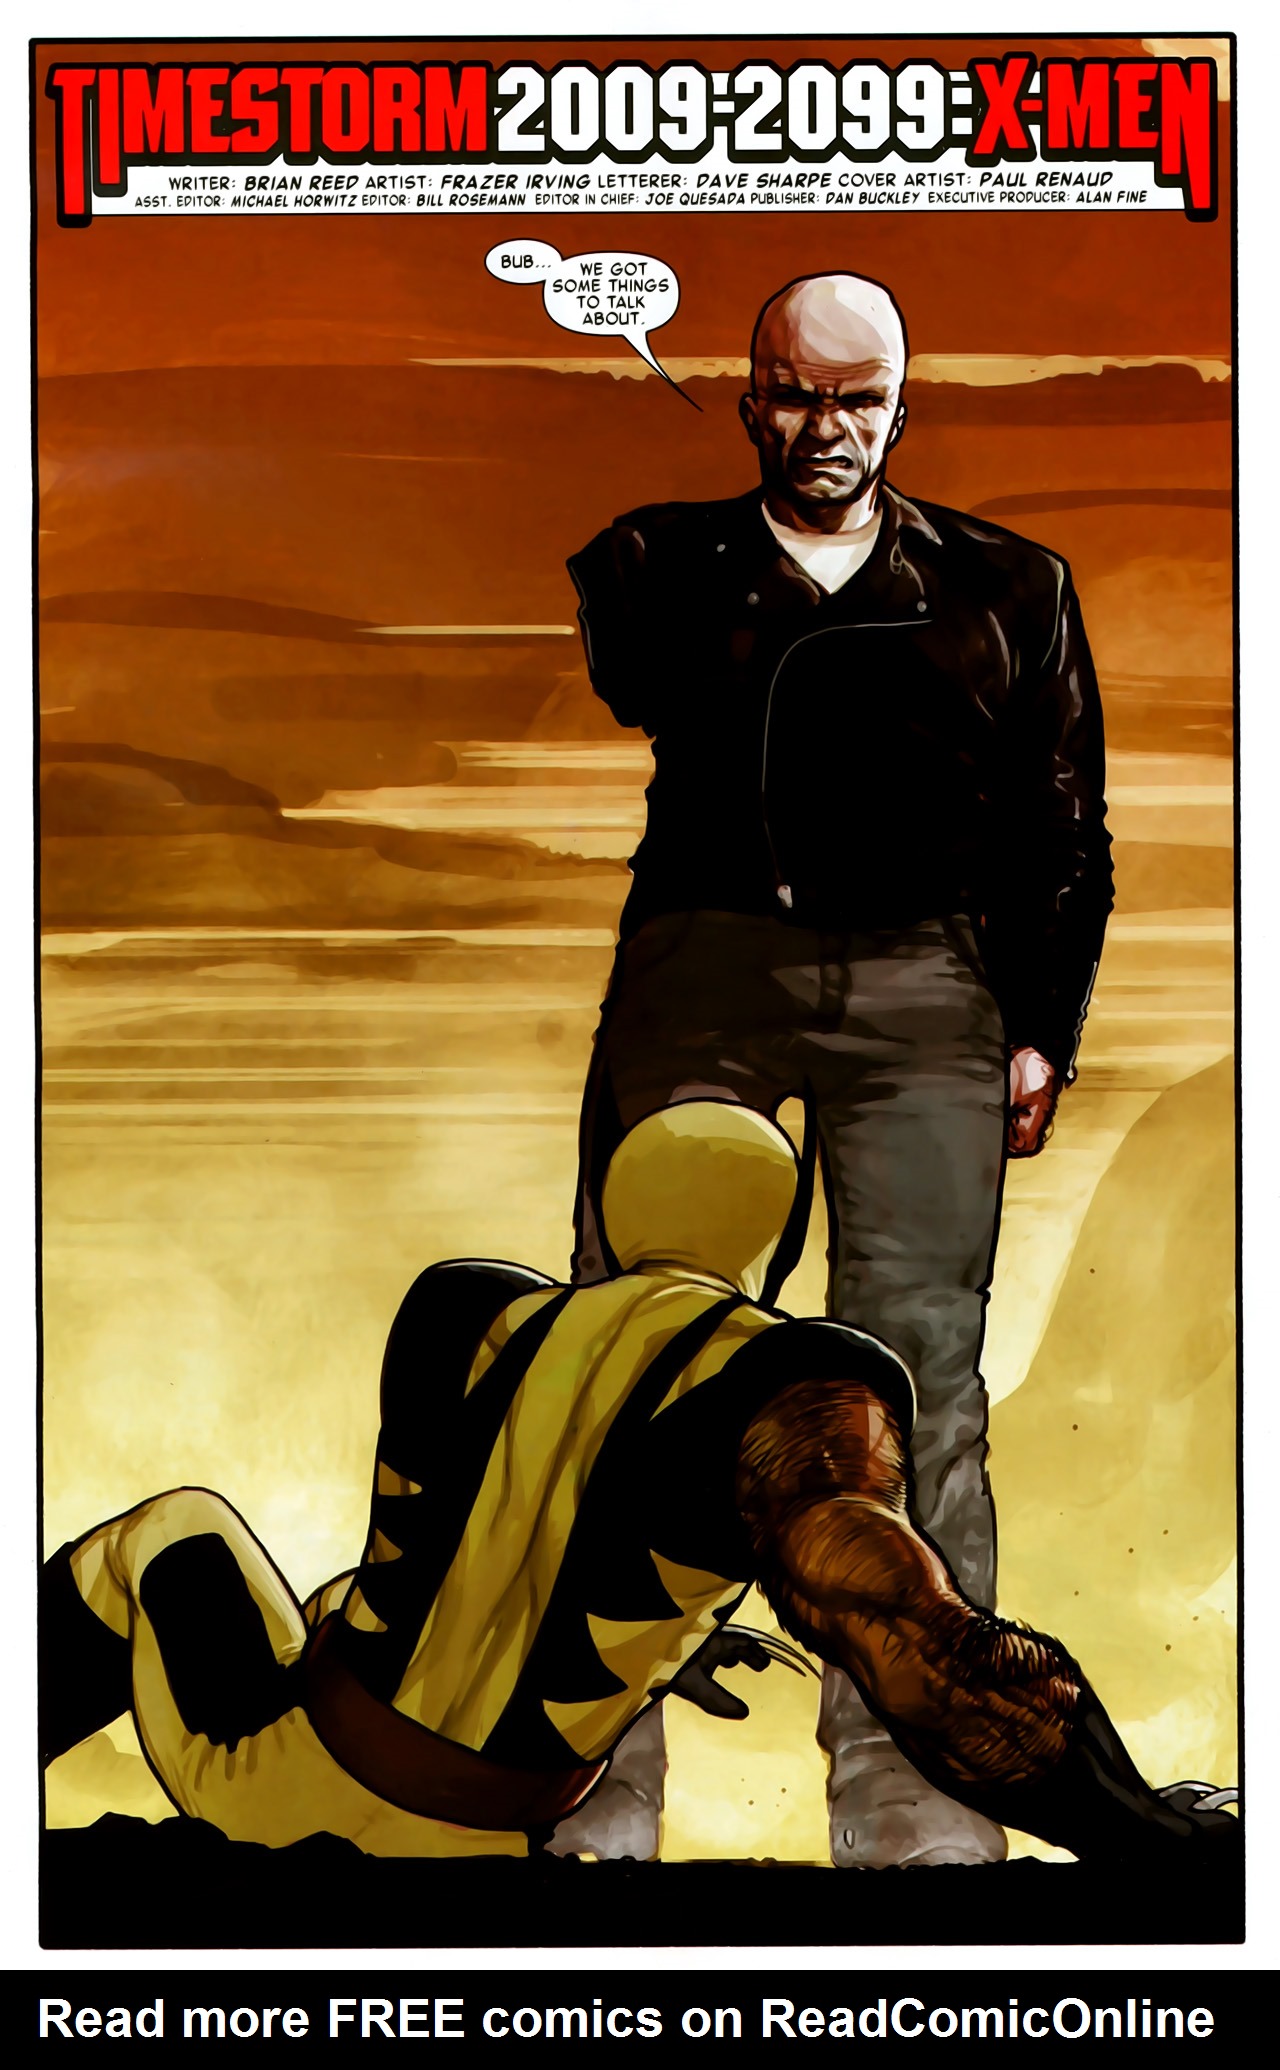 Read online Timestorm 2009/2099: X-Men comic -  Issue # Full - 4